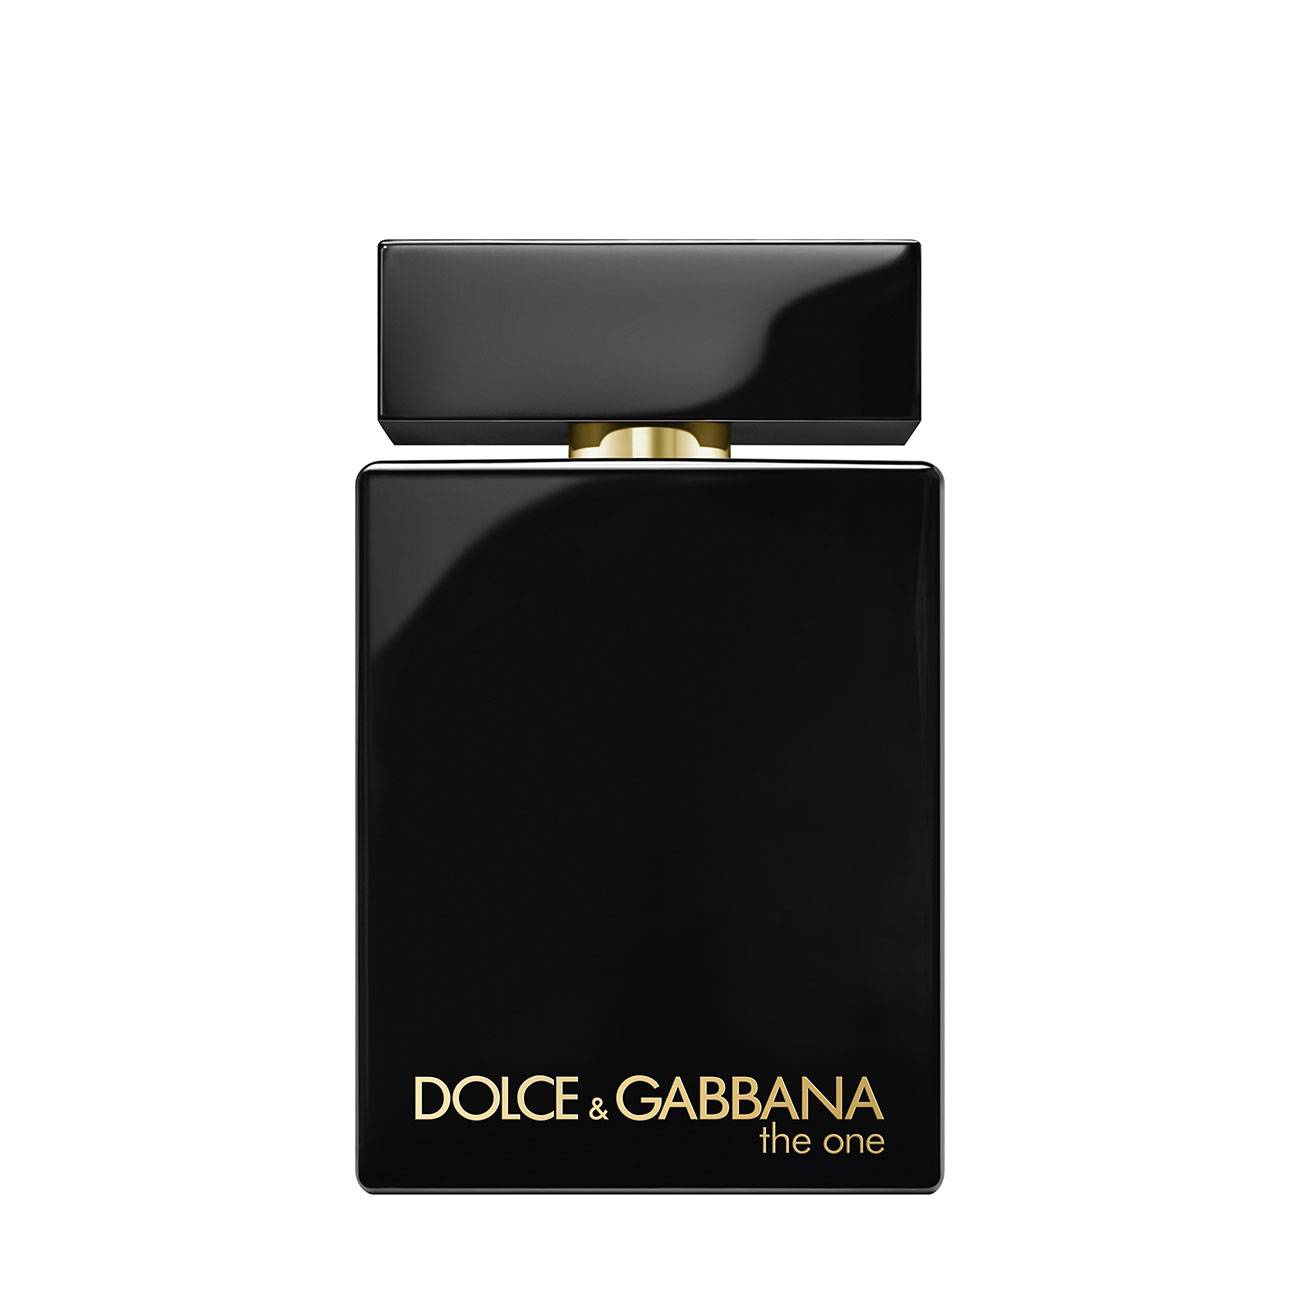 THE ONE FOR MEN INTENSE 100ml original Dolce & Gabbana bestvalue